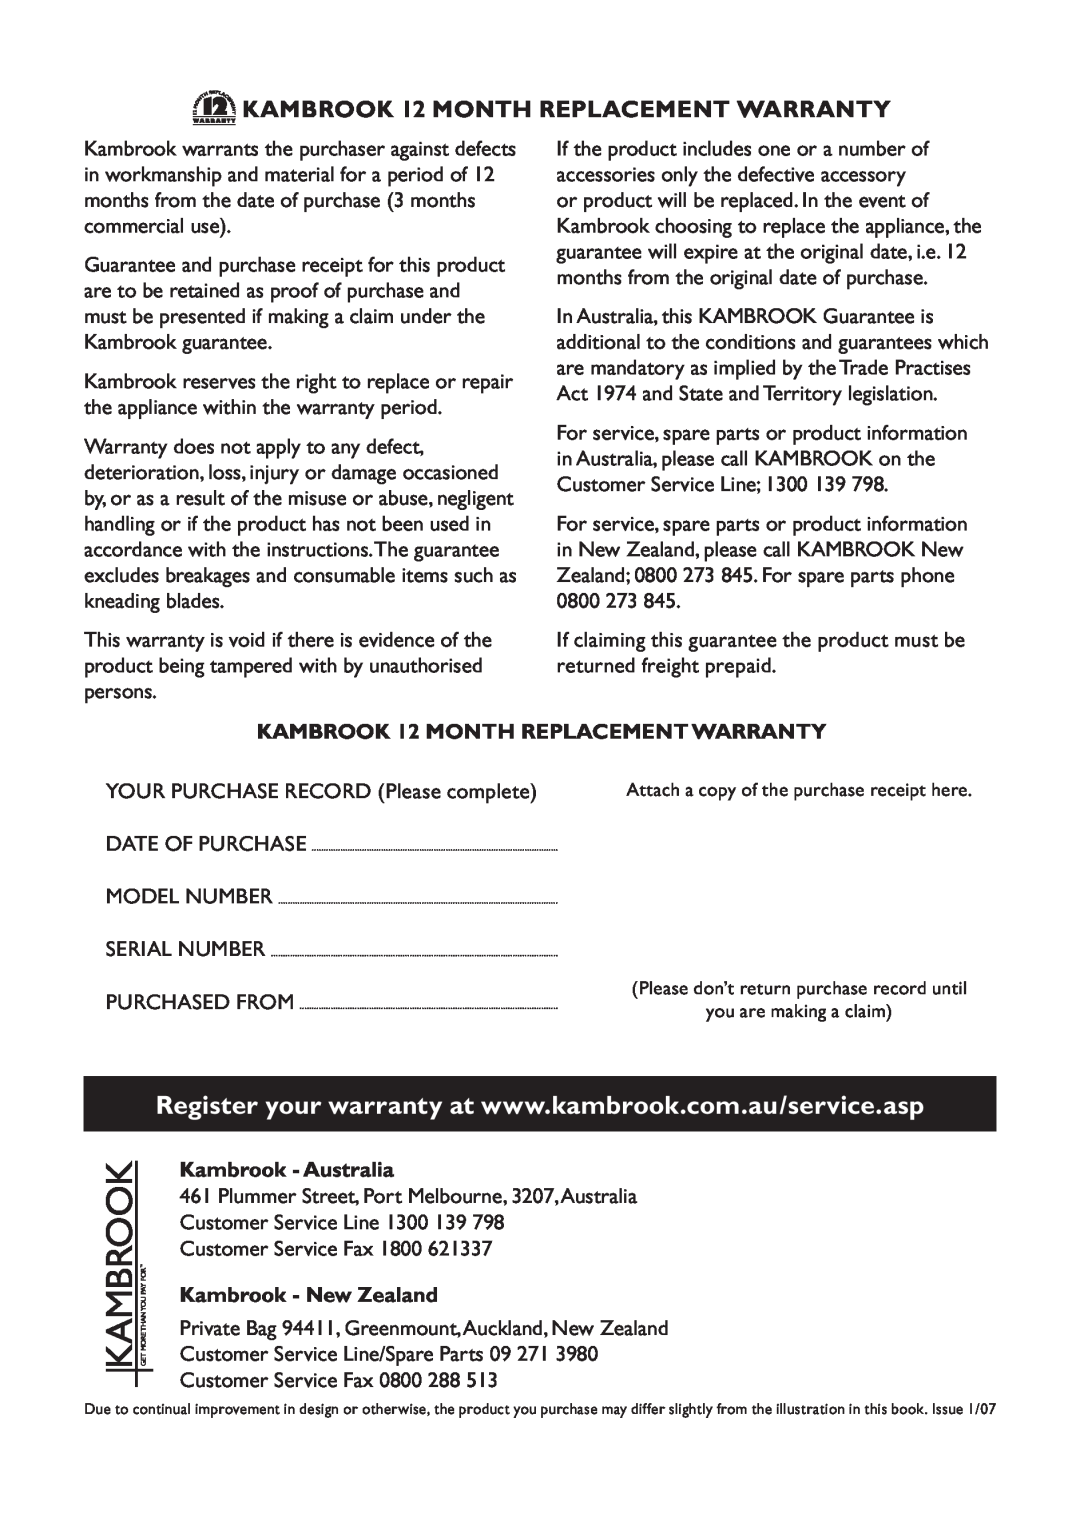 Kambrook KCE42 manual KAMBROOK 12 MONTH REPLACEMENT WARRANTY, Kambrook - Australia, Kambrook - New Zealand 